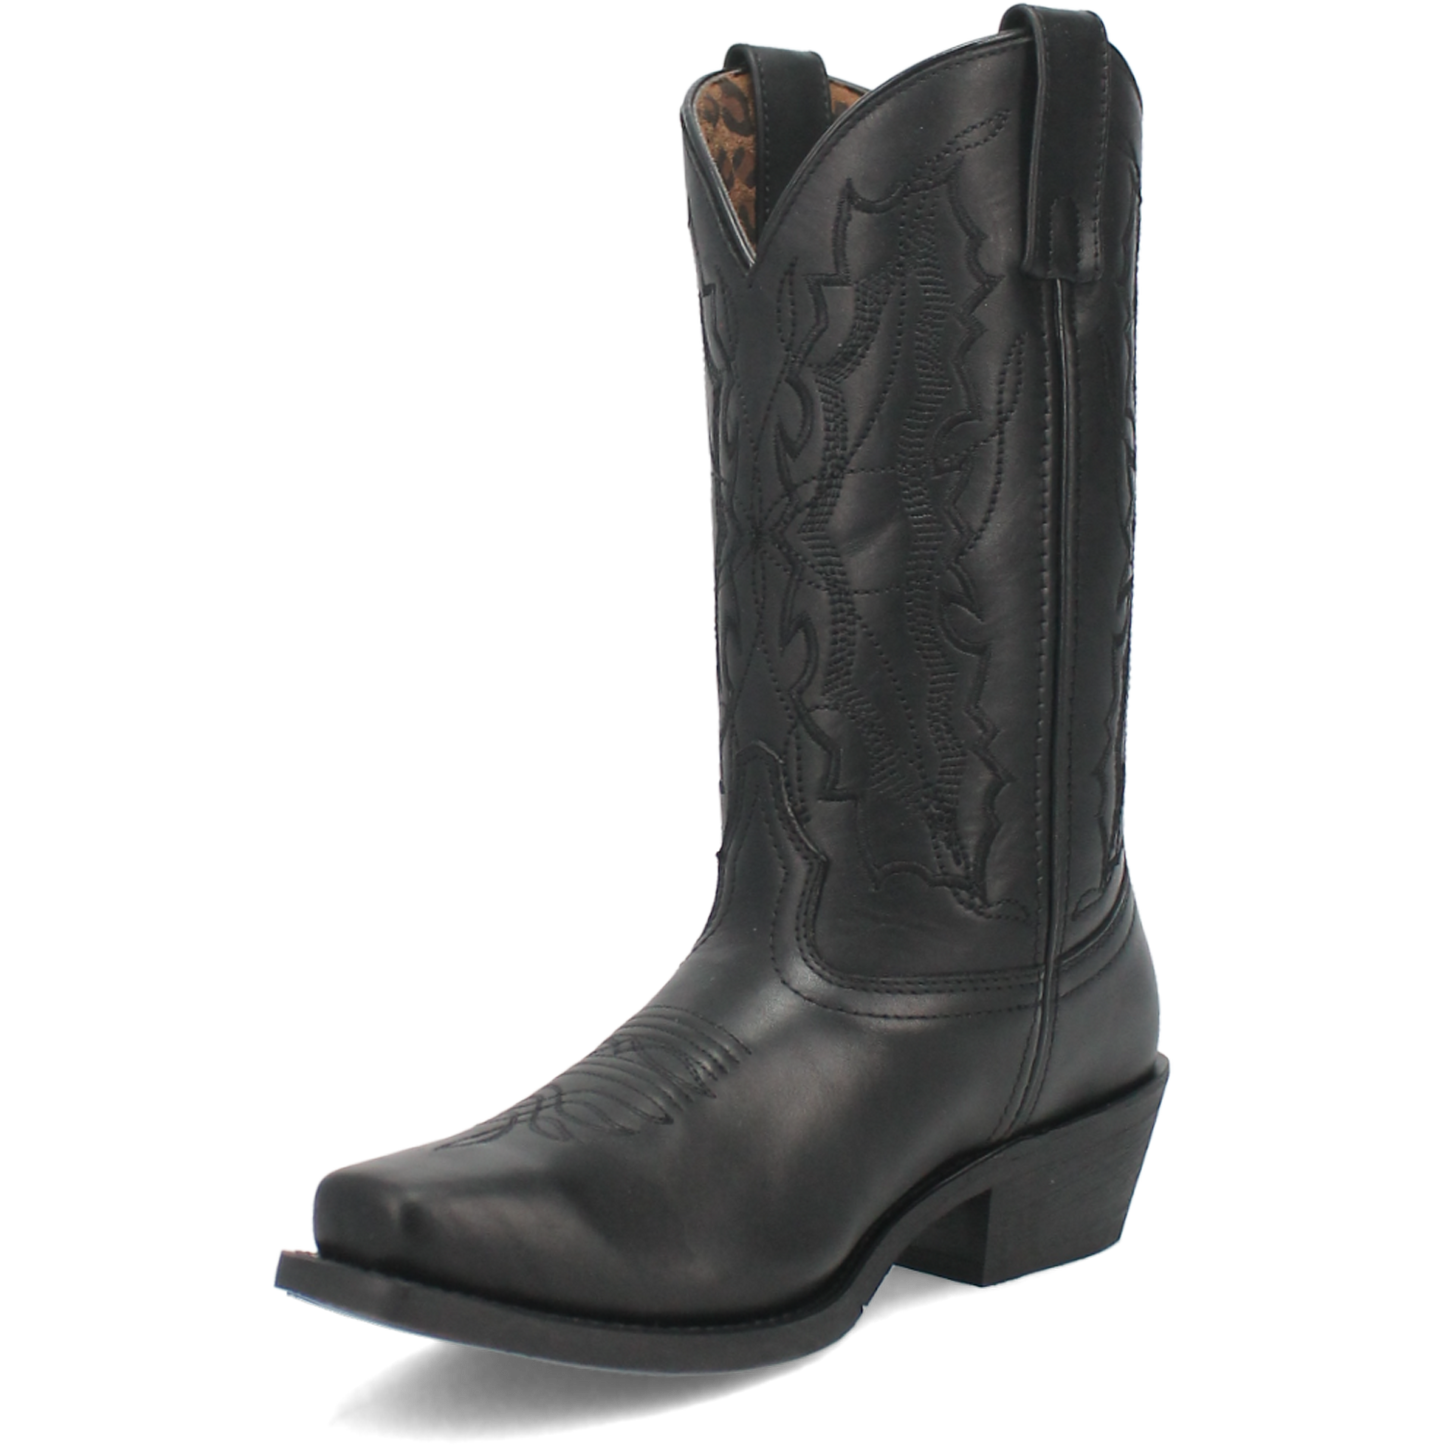 Laredo Ladies Harleigh Square Toe Black Leather Western Boots 51140-BK